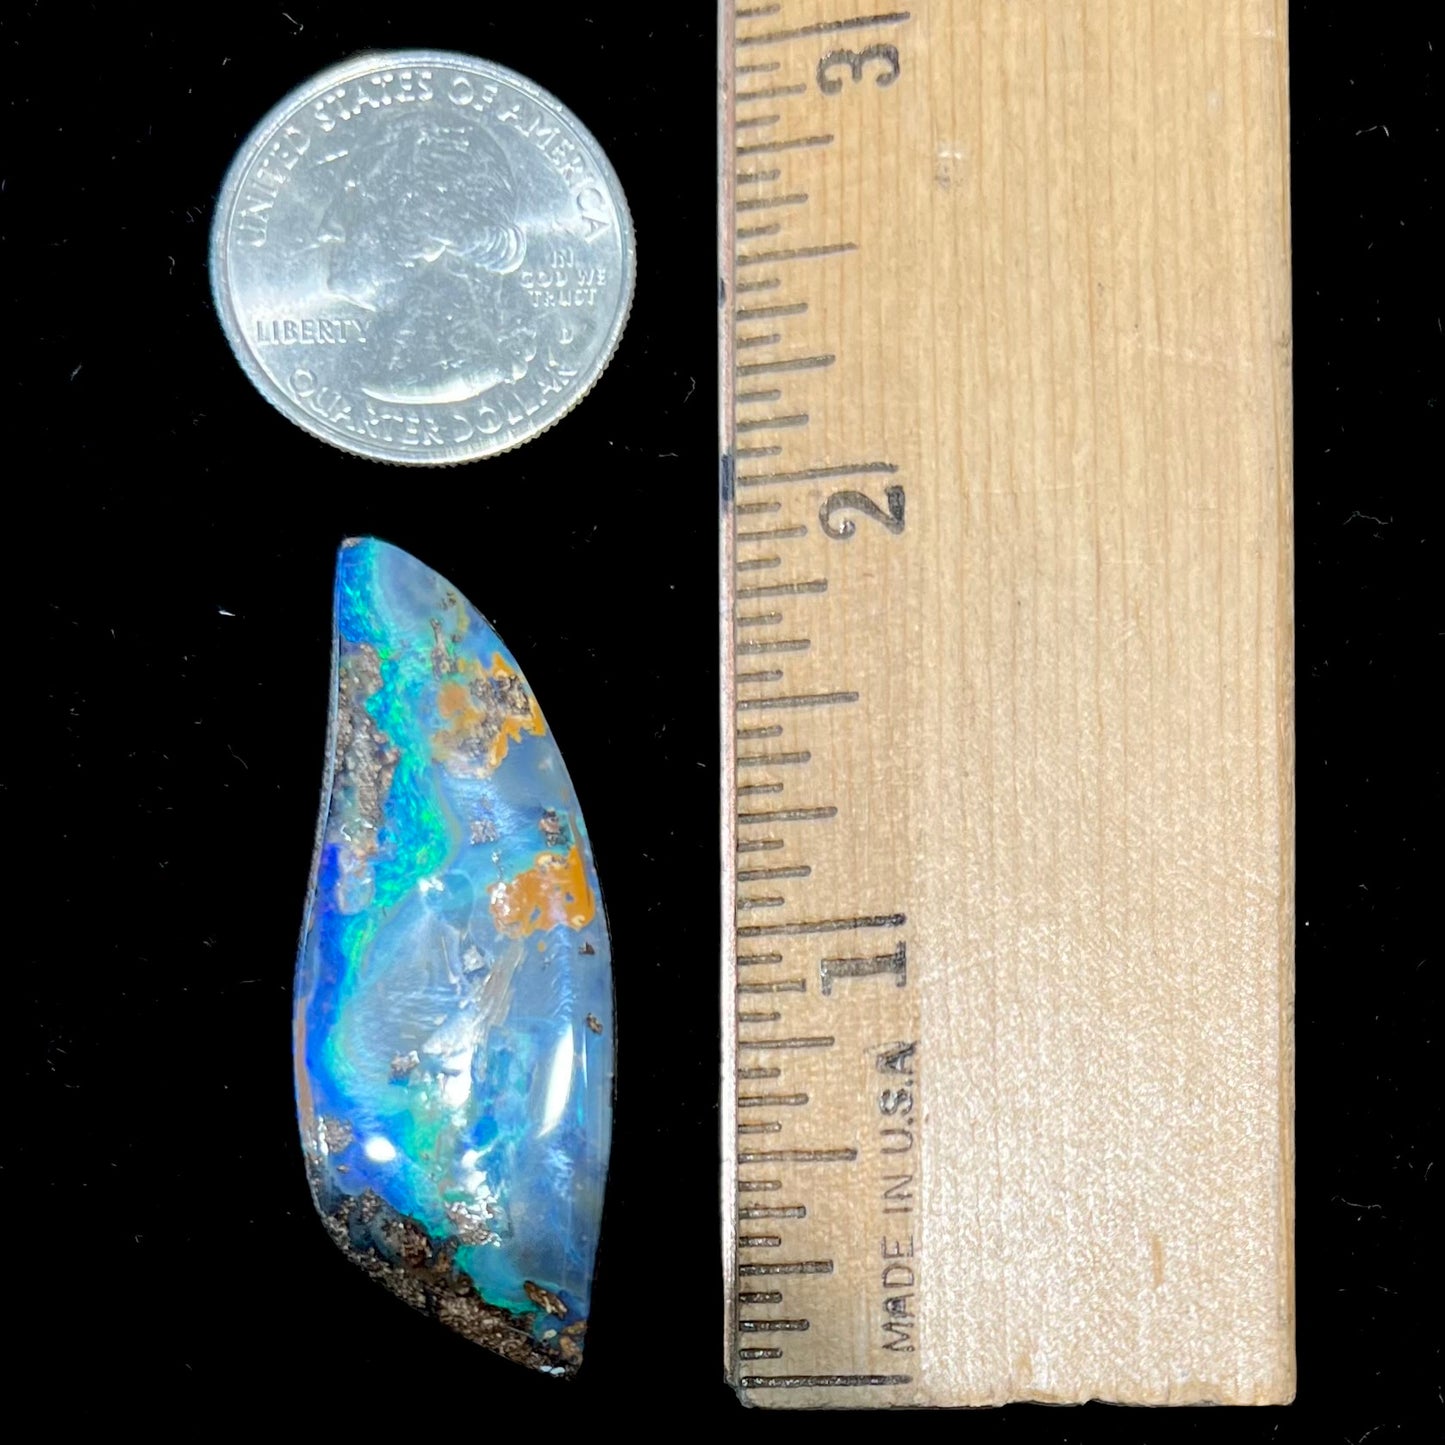 A freeform cut, loose black boulder opal stone from Queensland, Australia.